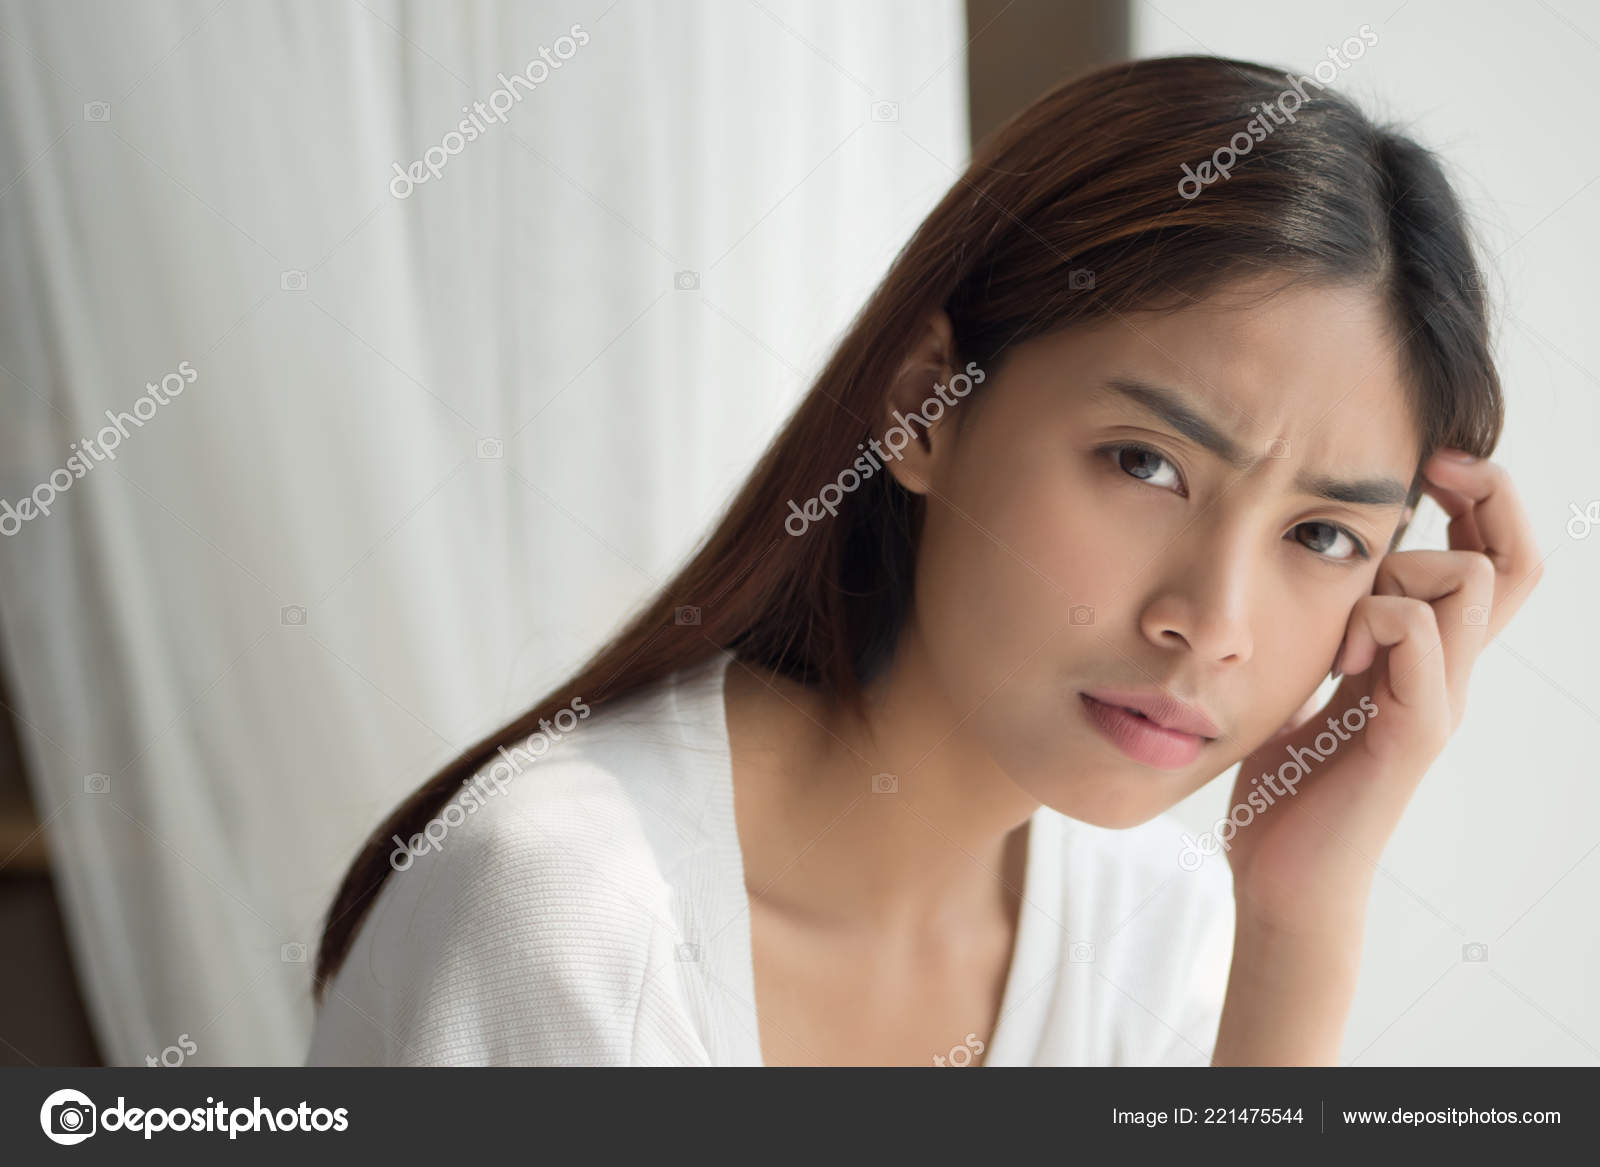 depositphotos_221475544-stock-photo-unhappy-angry-upset-asian-woman.jpg